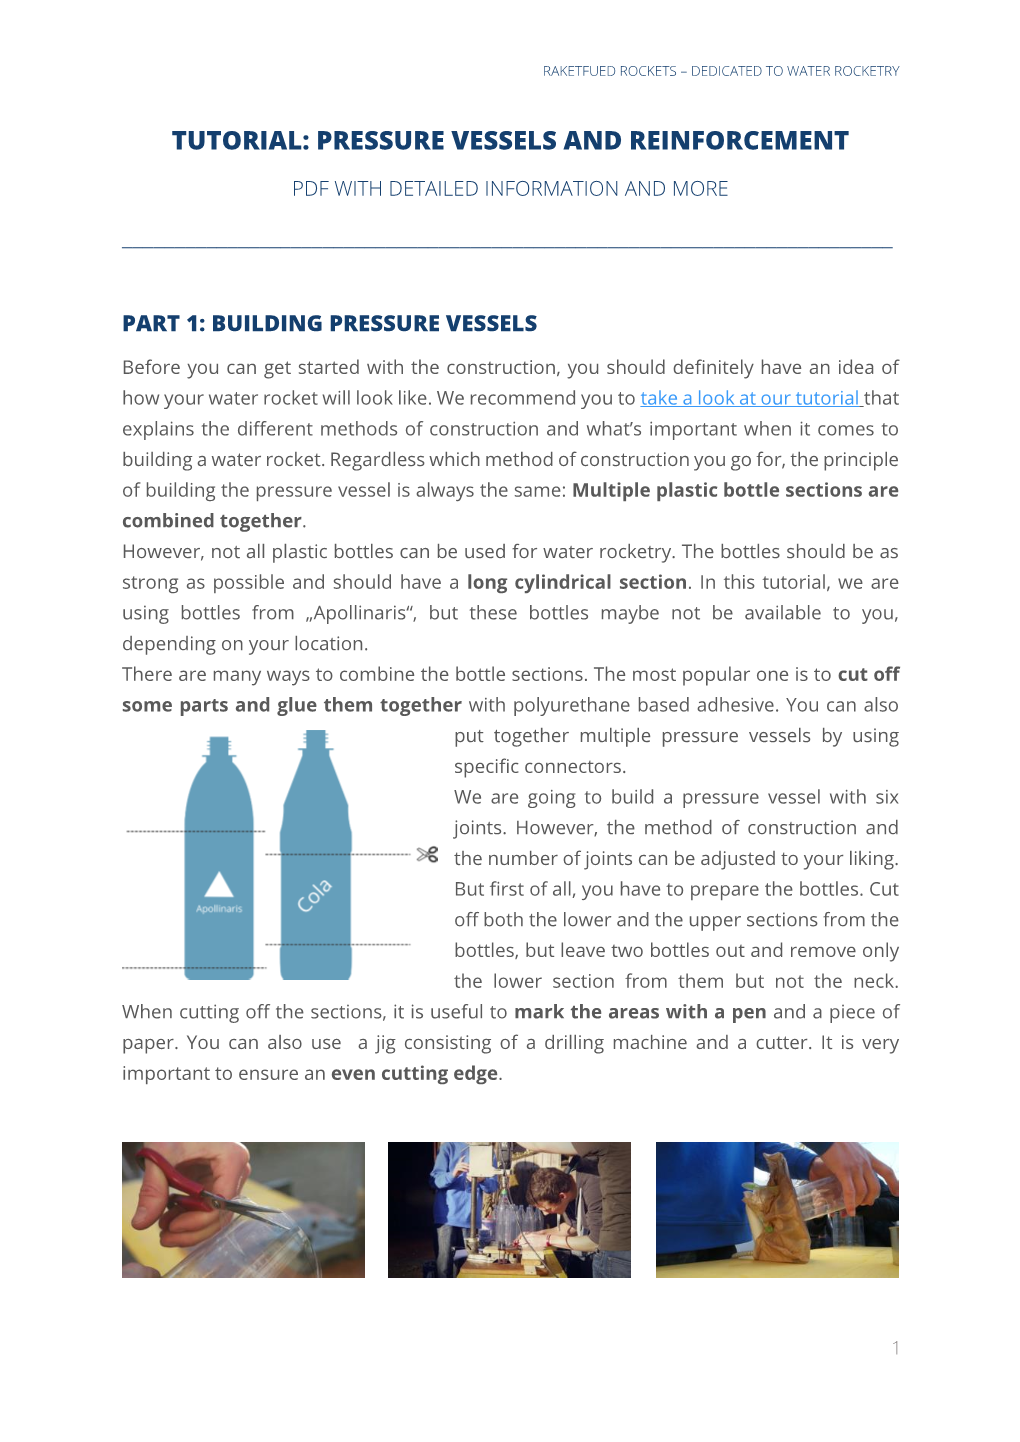 Tutorial: Pressure Vessels and Reinforcement